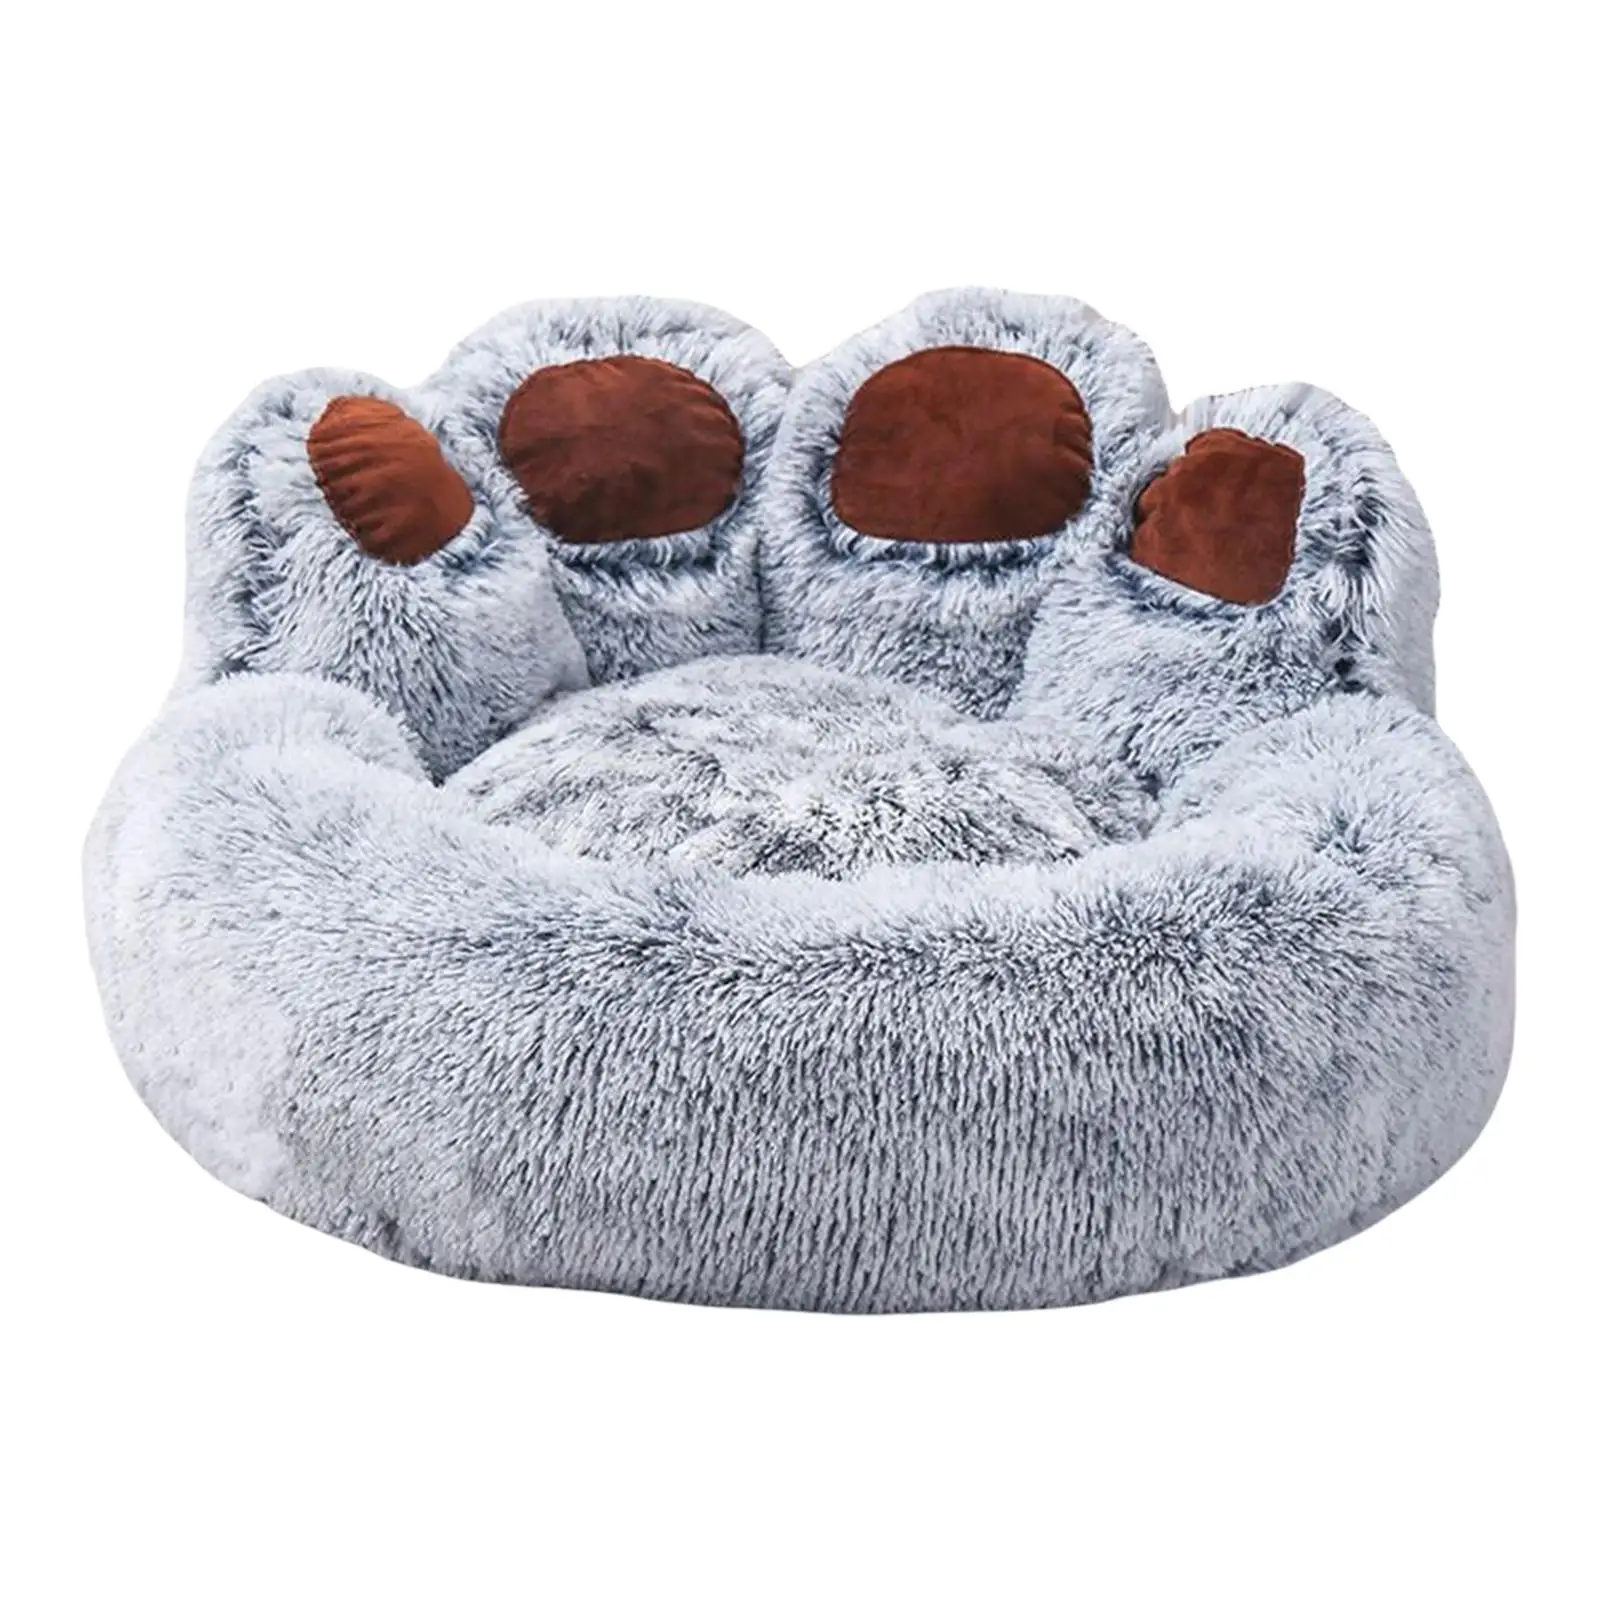 Plush Cat Warm House Dog Bed Self Warming Anti Slip Bottom Soft Calming Pet